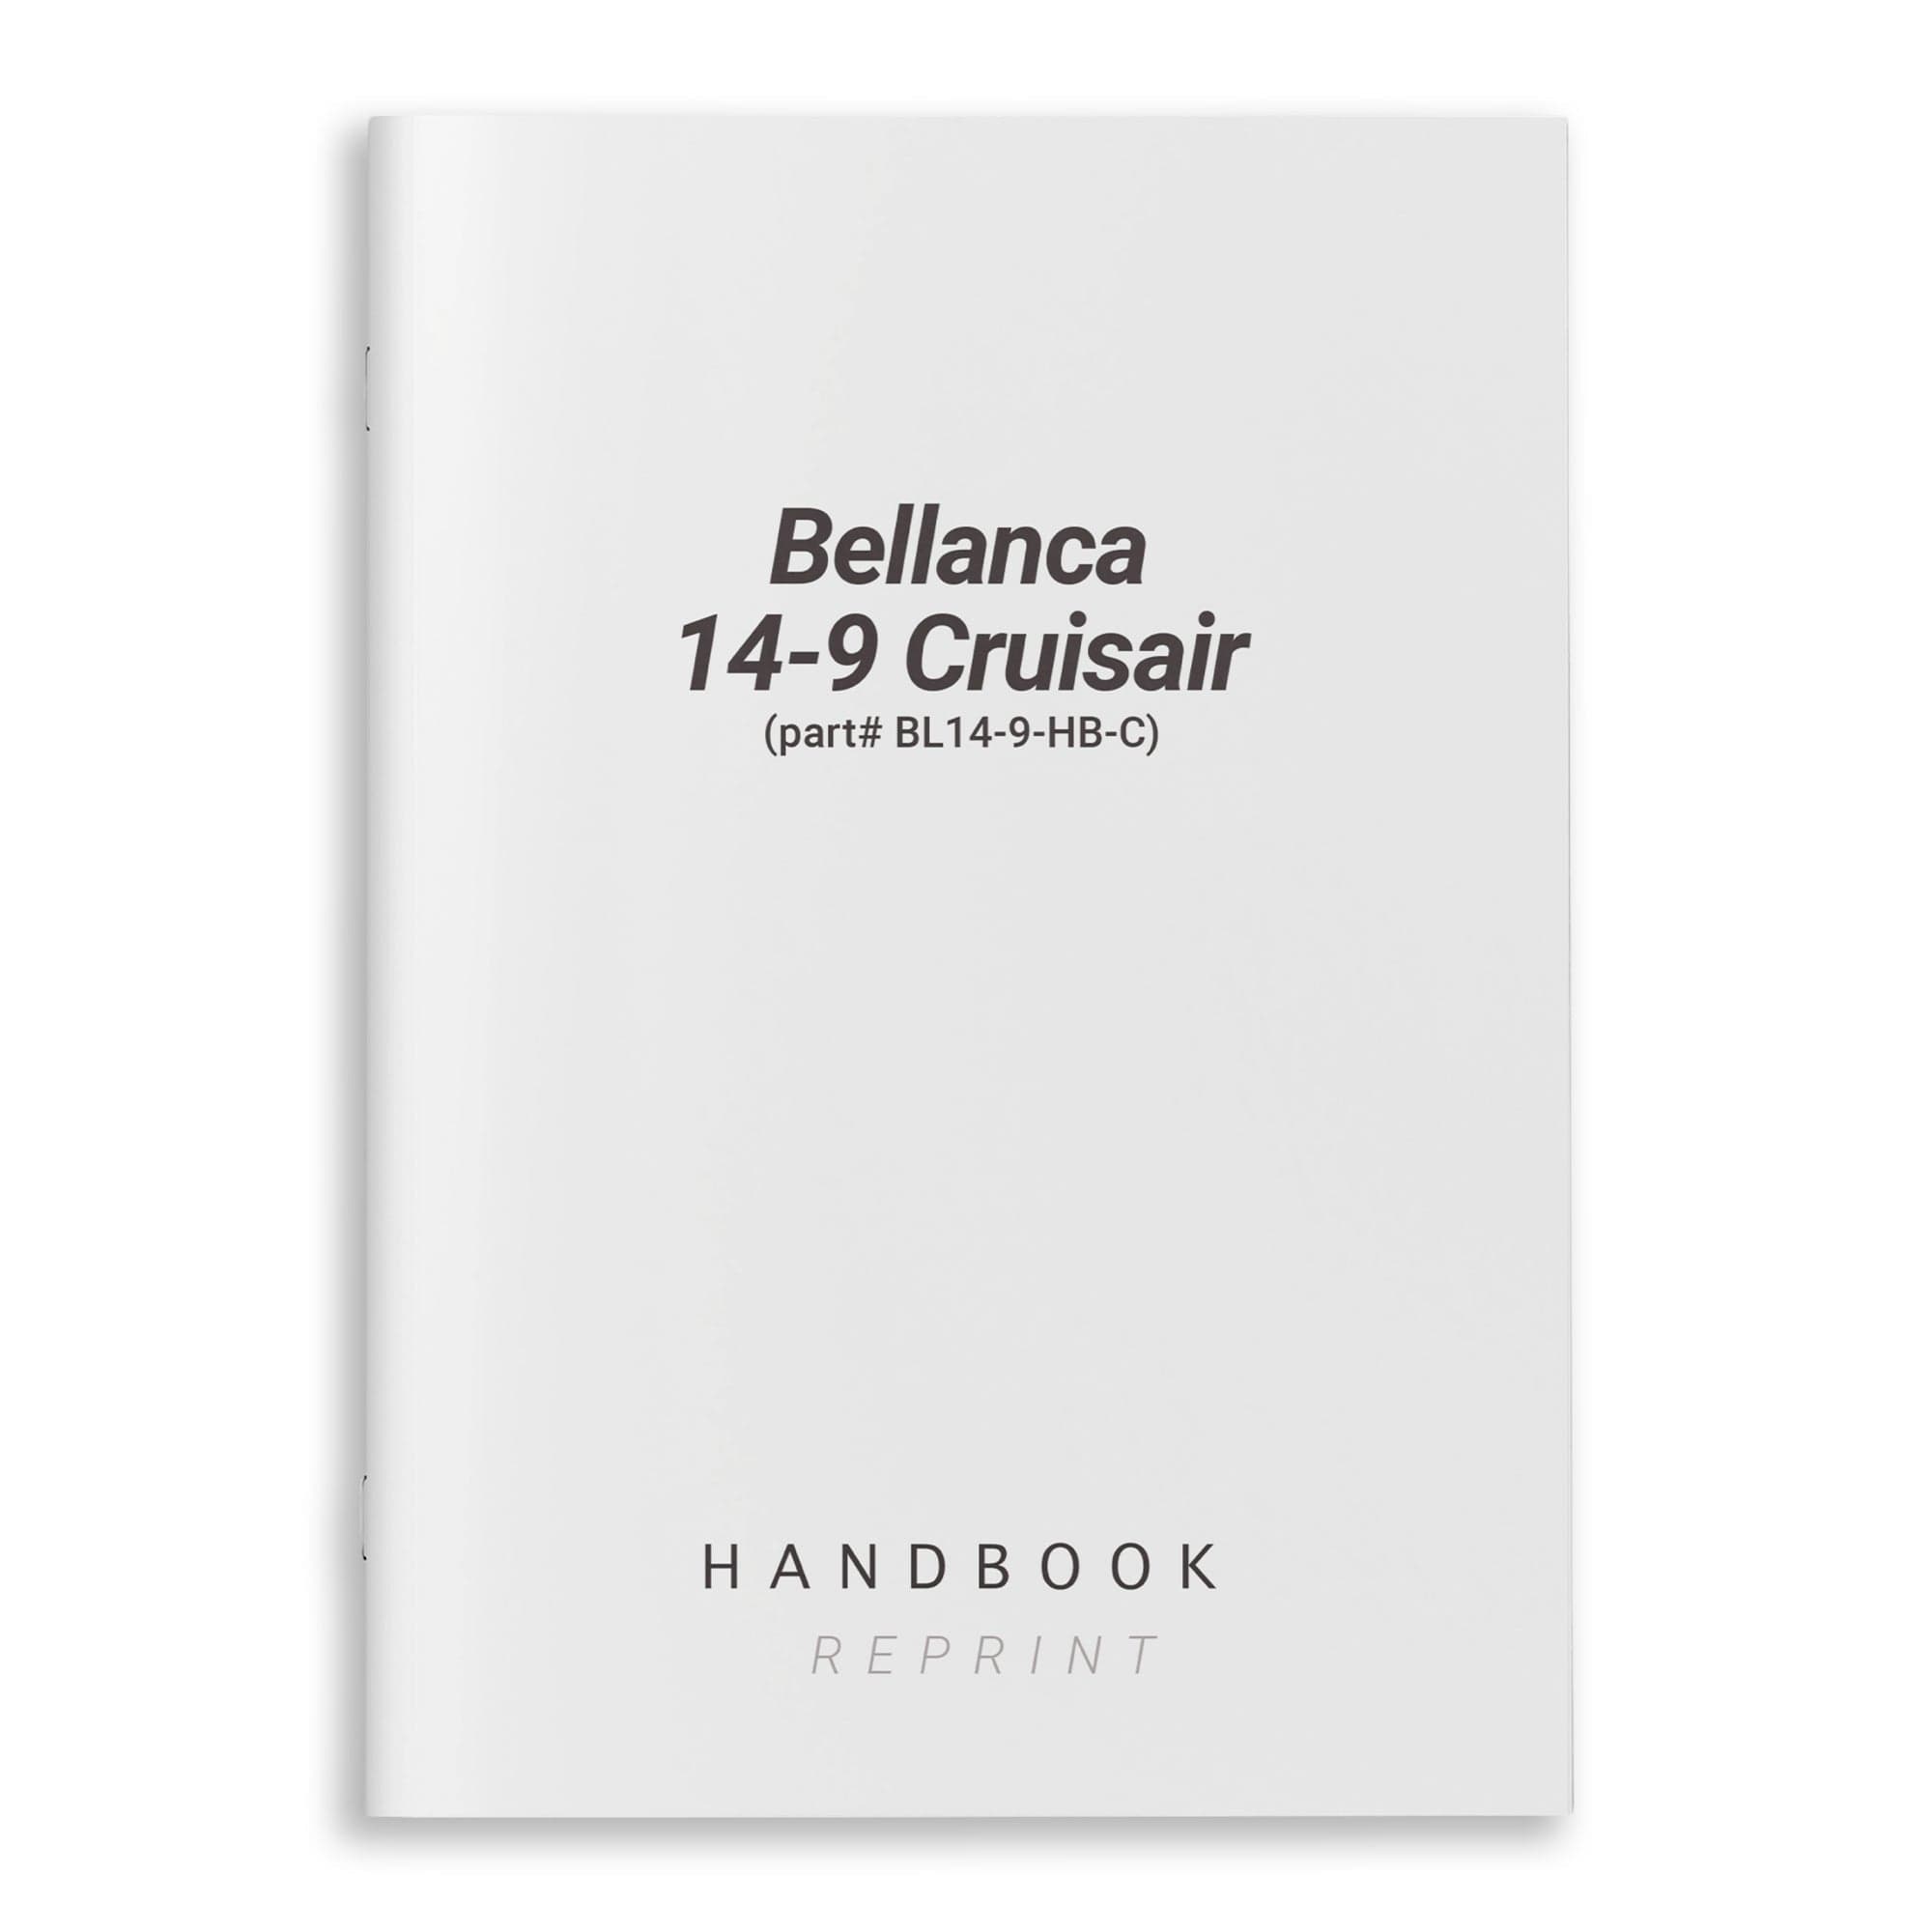 Bellanca 14-9 Cruisair Handbook (part# BL14-9-HB-C)